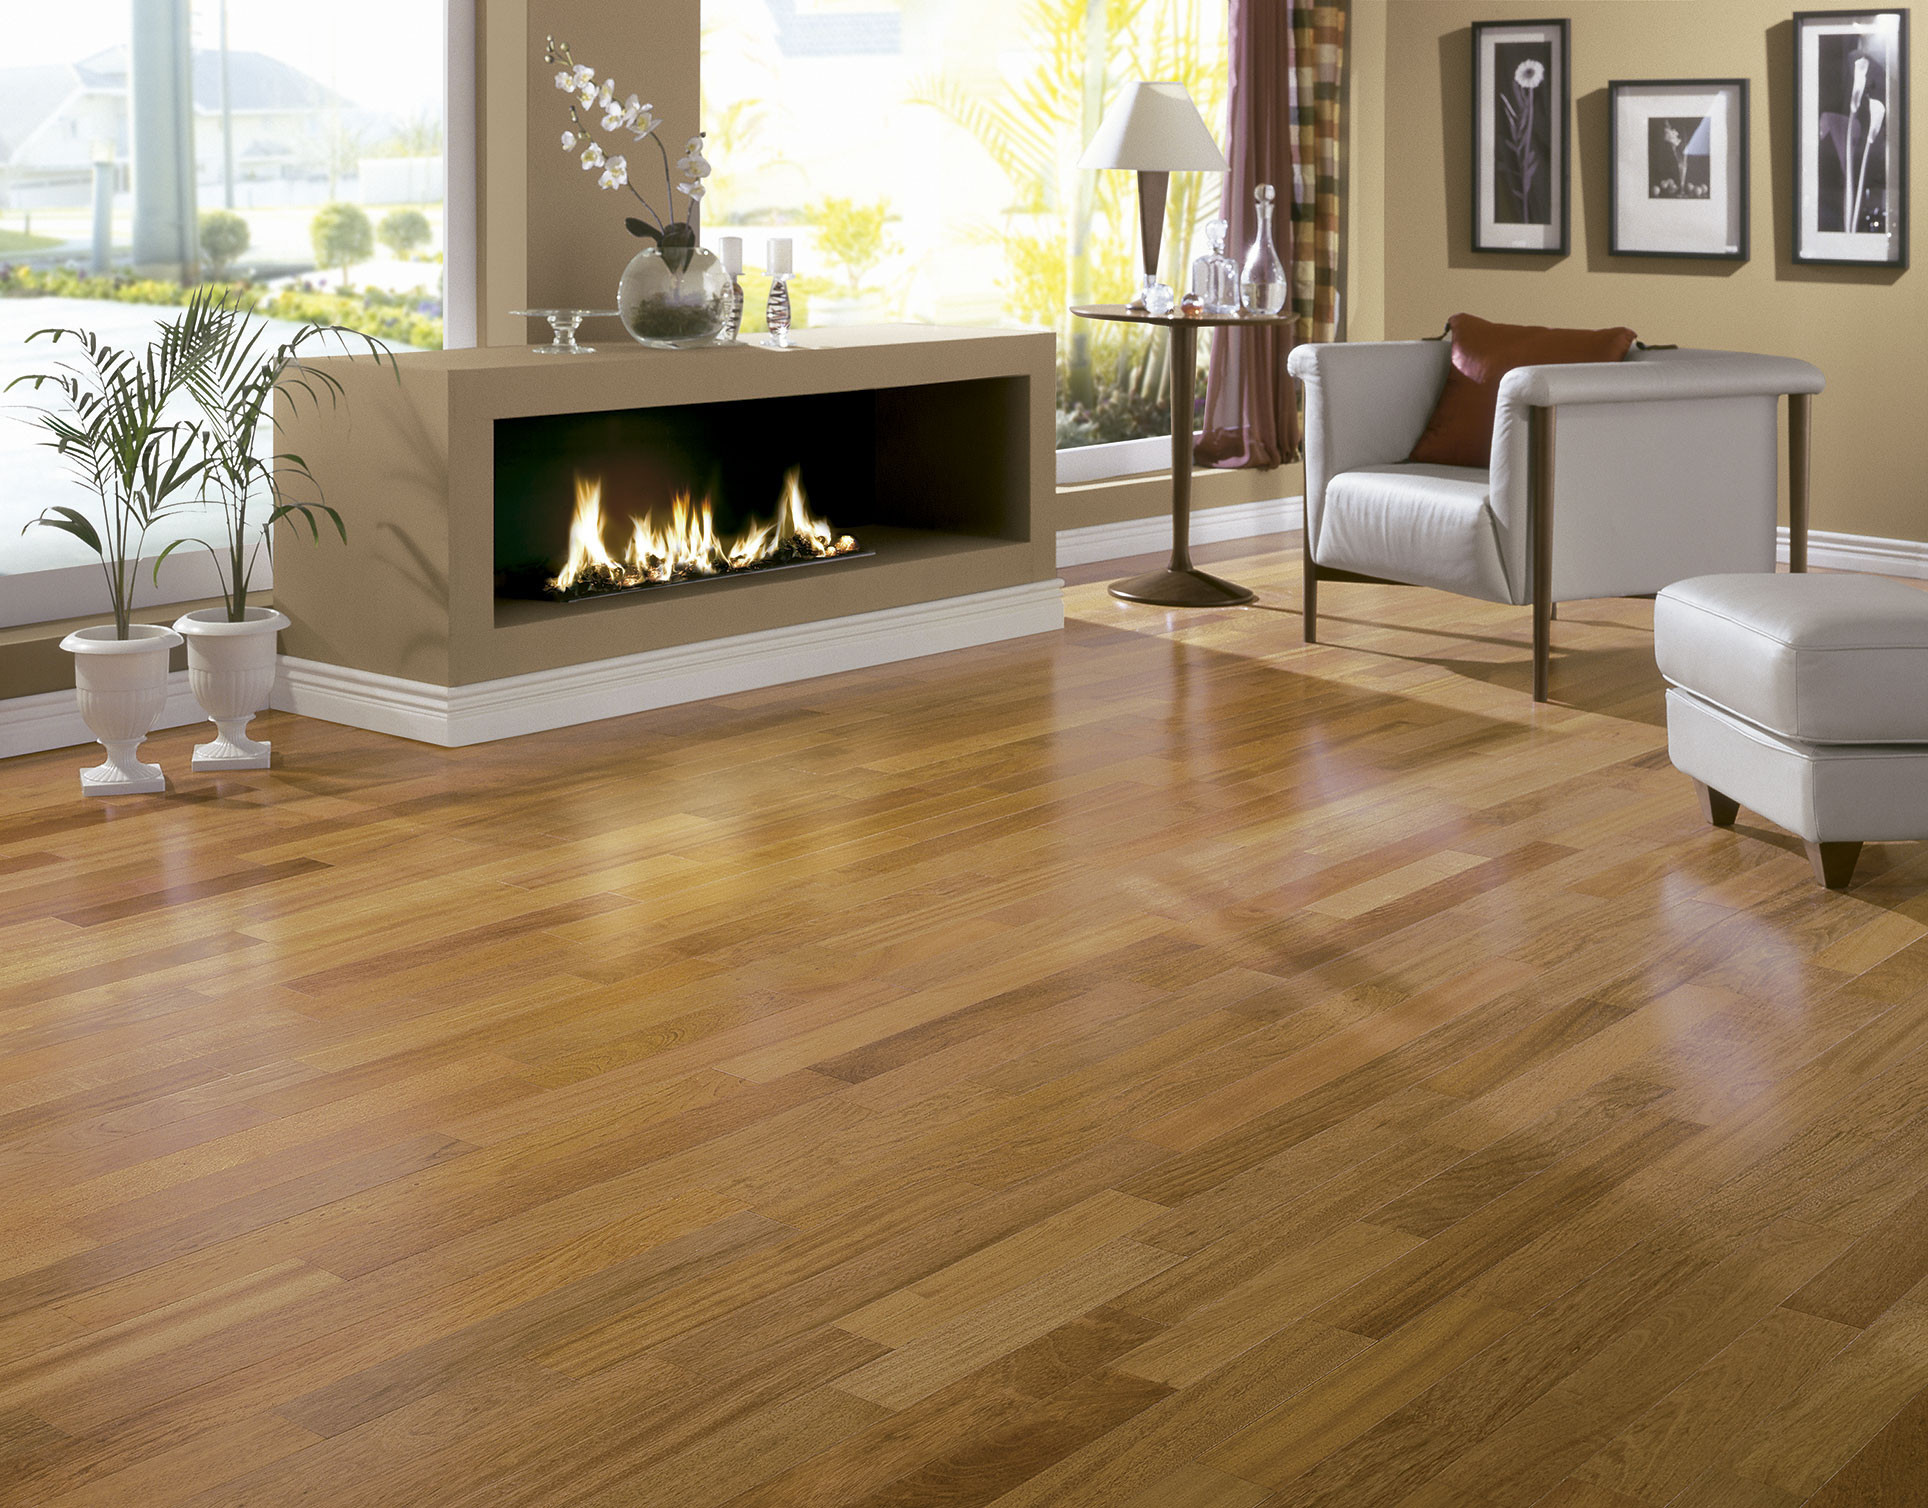 Muskoka Fireplace Fresh 16 Spectacular Hardwood Floor Patterns